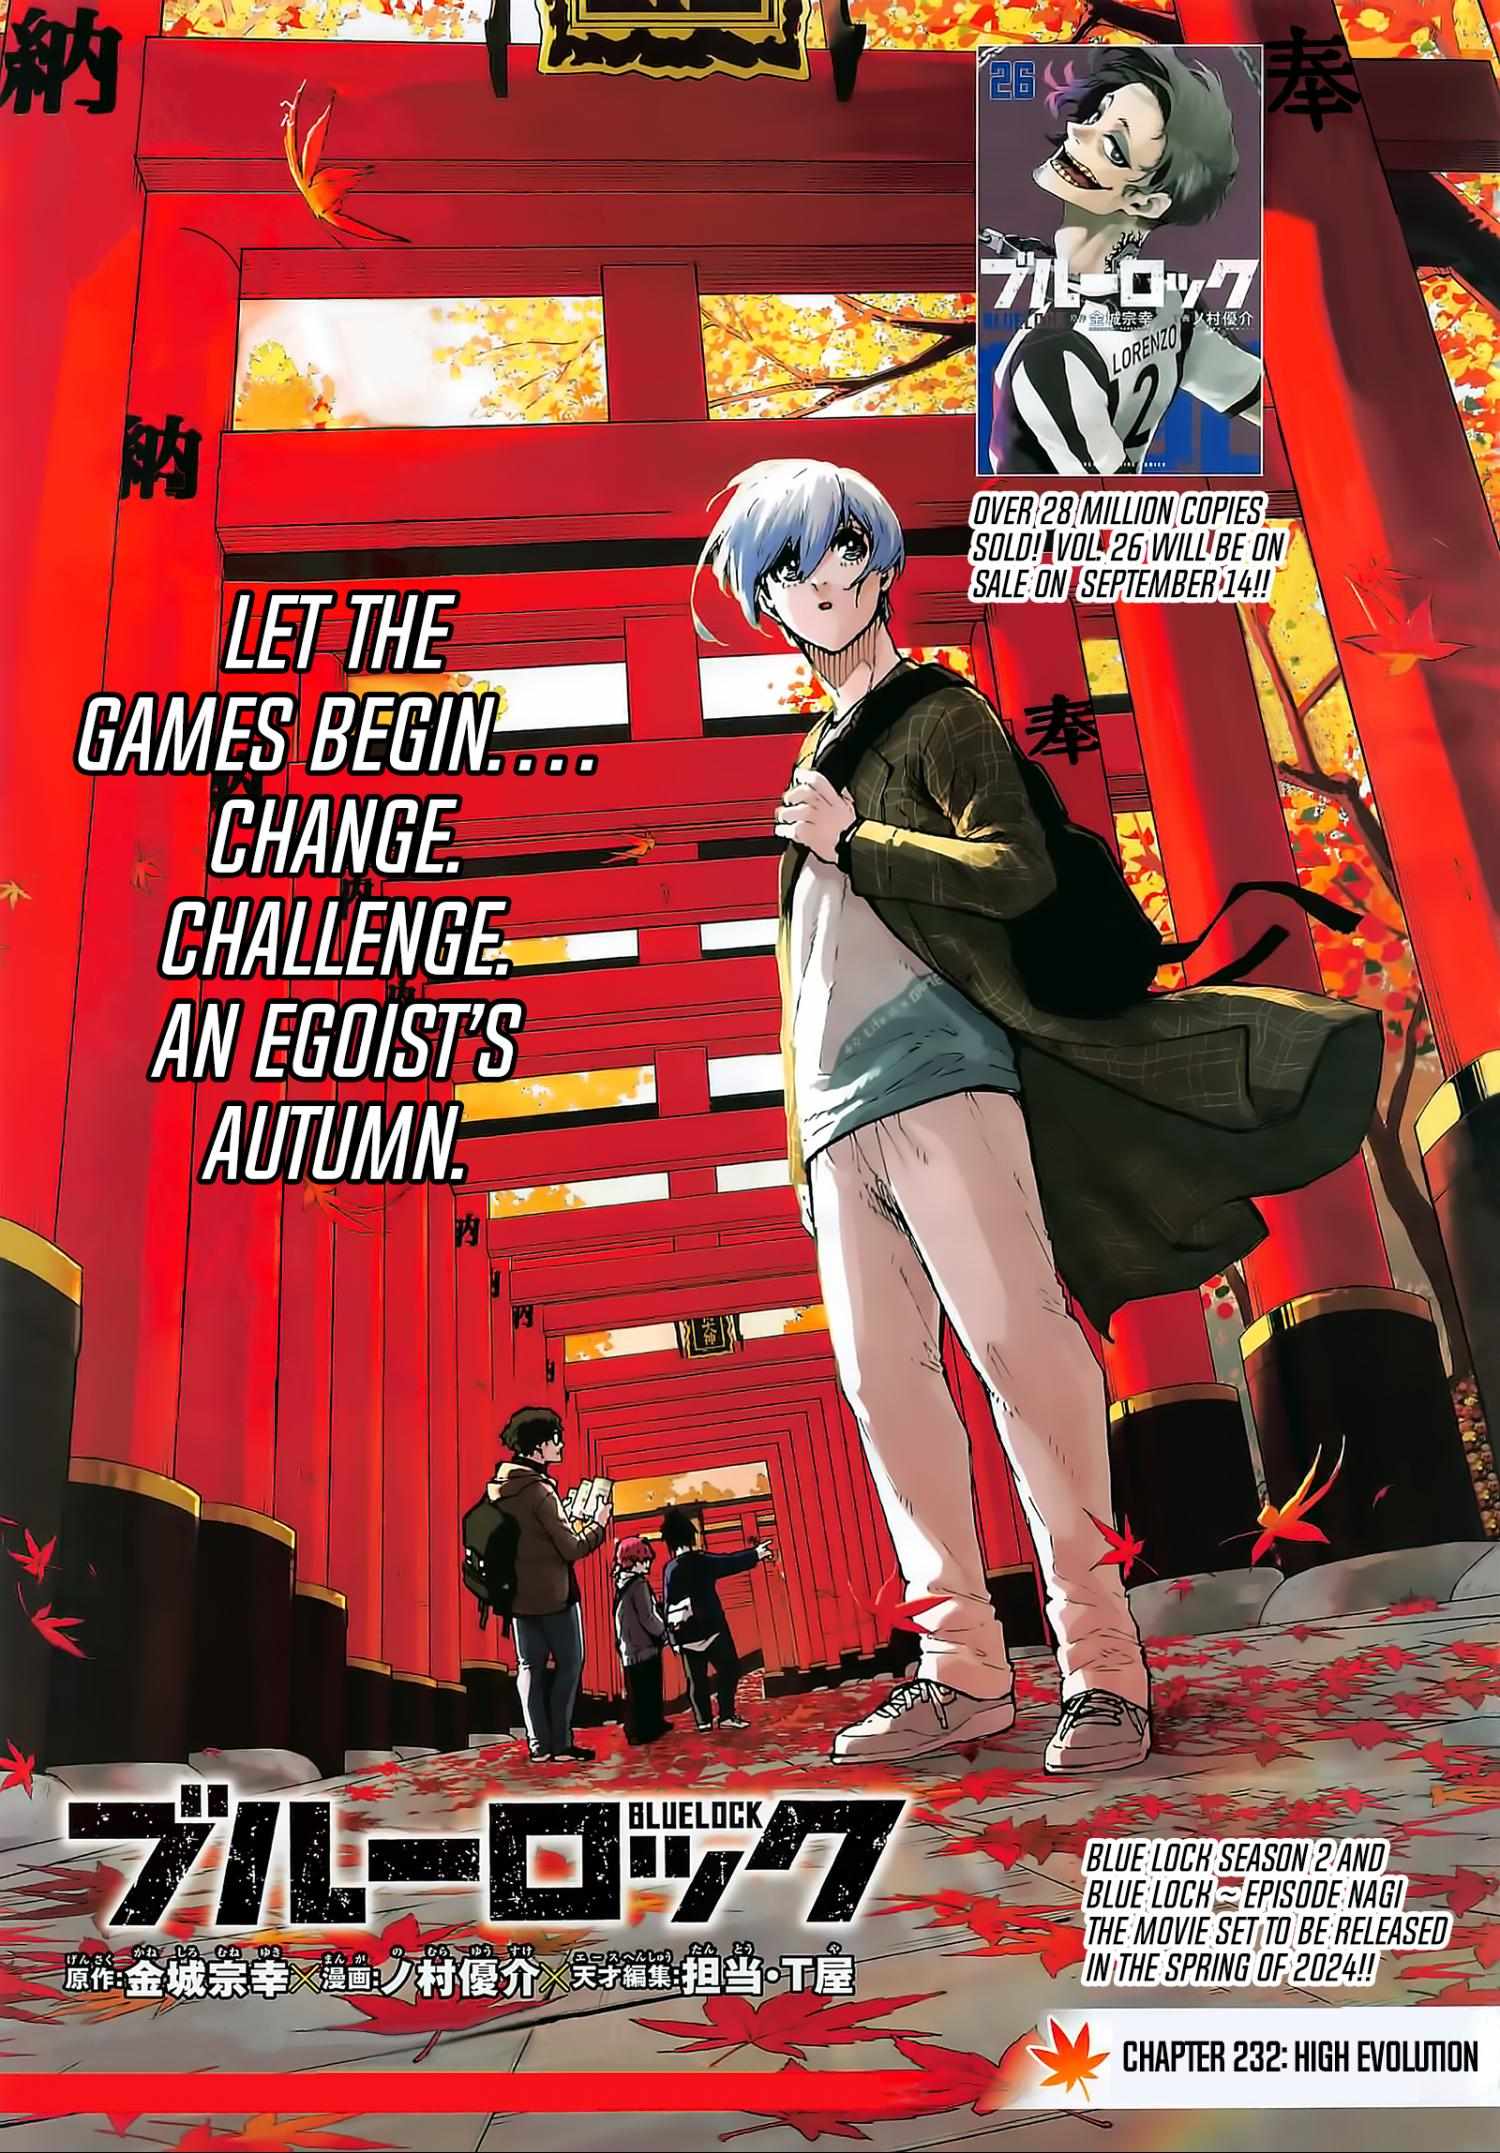 Read Blue Lock Manga Chapter 132 in English Free Online